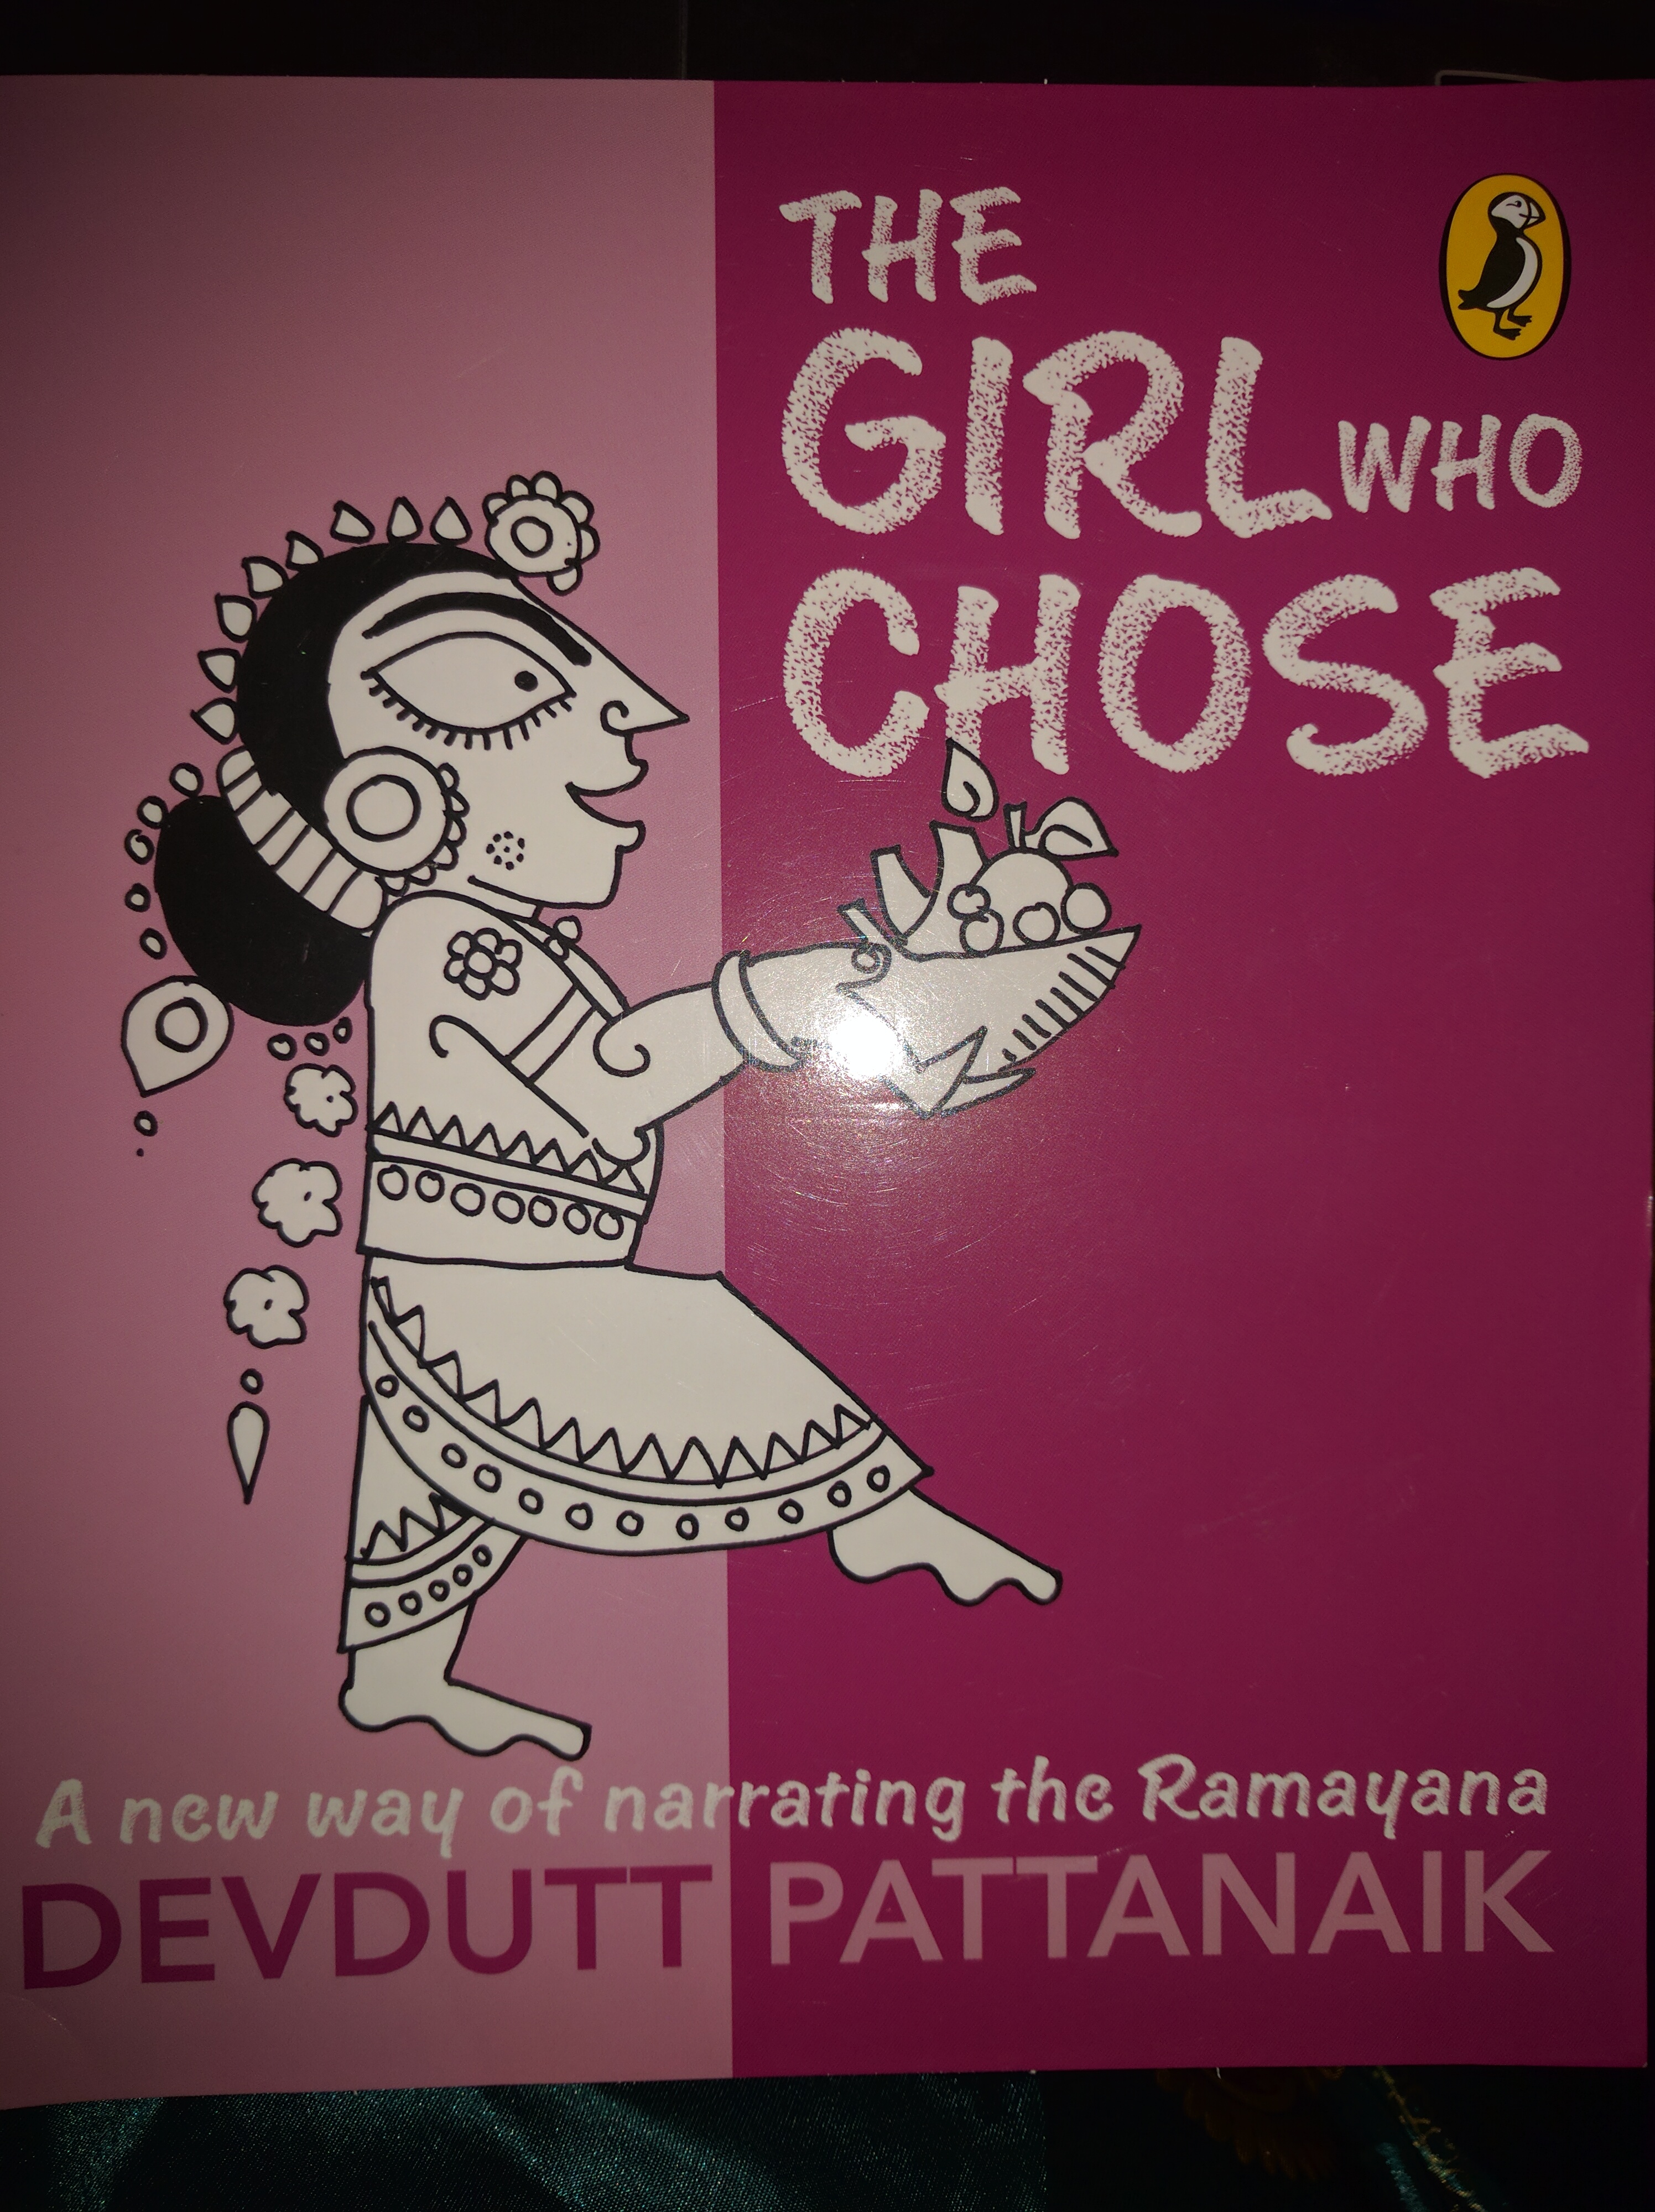 Devdutt Pattanaik’s “the Girl Who Chose” Jaya S Blog